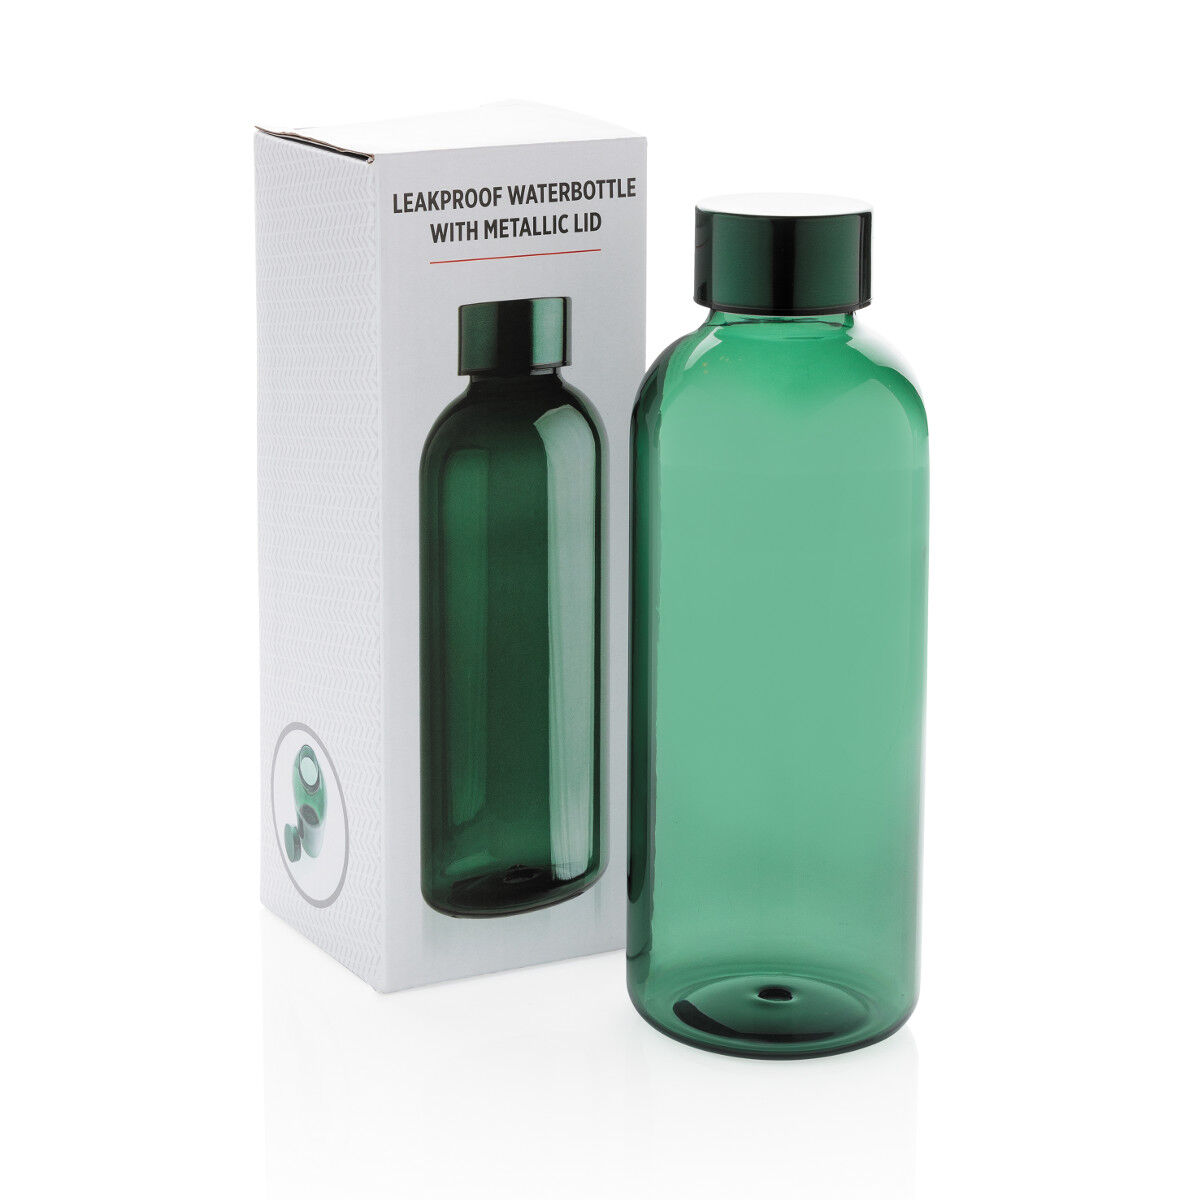 620ml Leakproof water bottle with metallic lid (packaging)